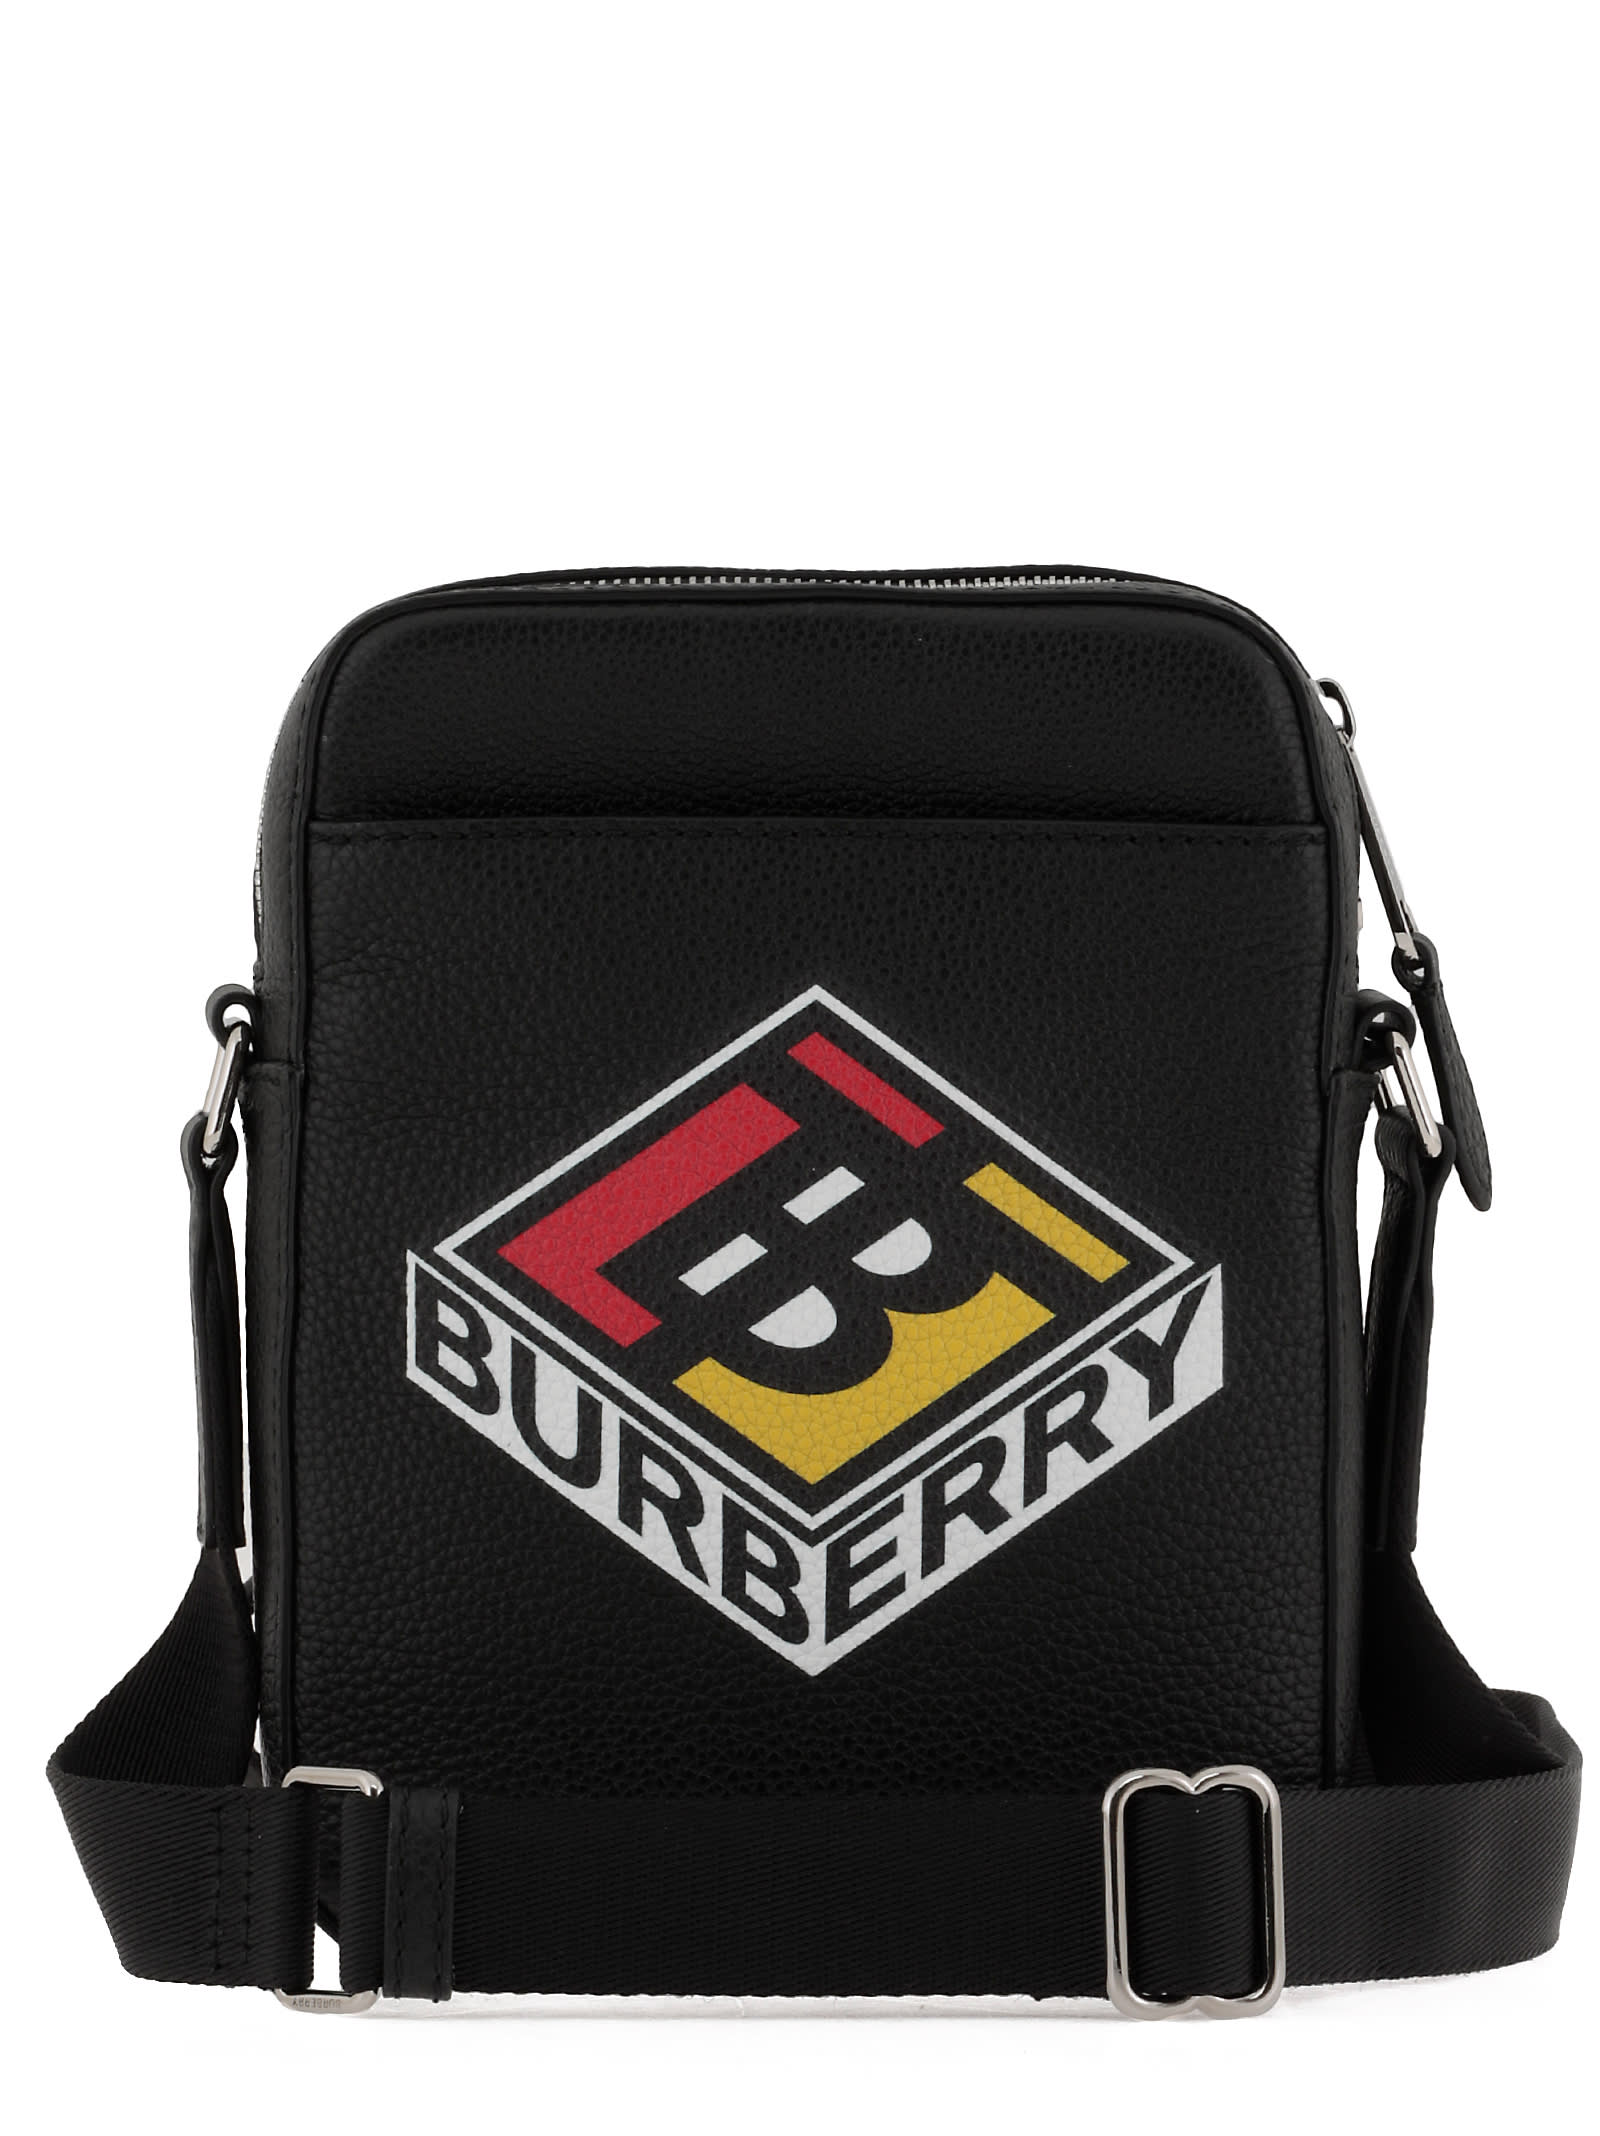 Burberry Thornton Cross Body Bag In Black